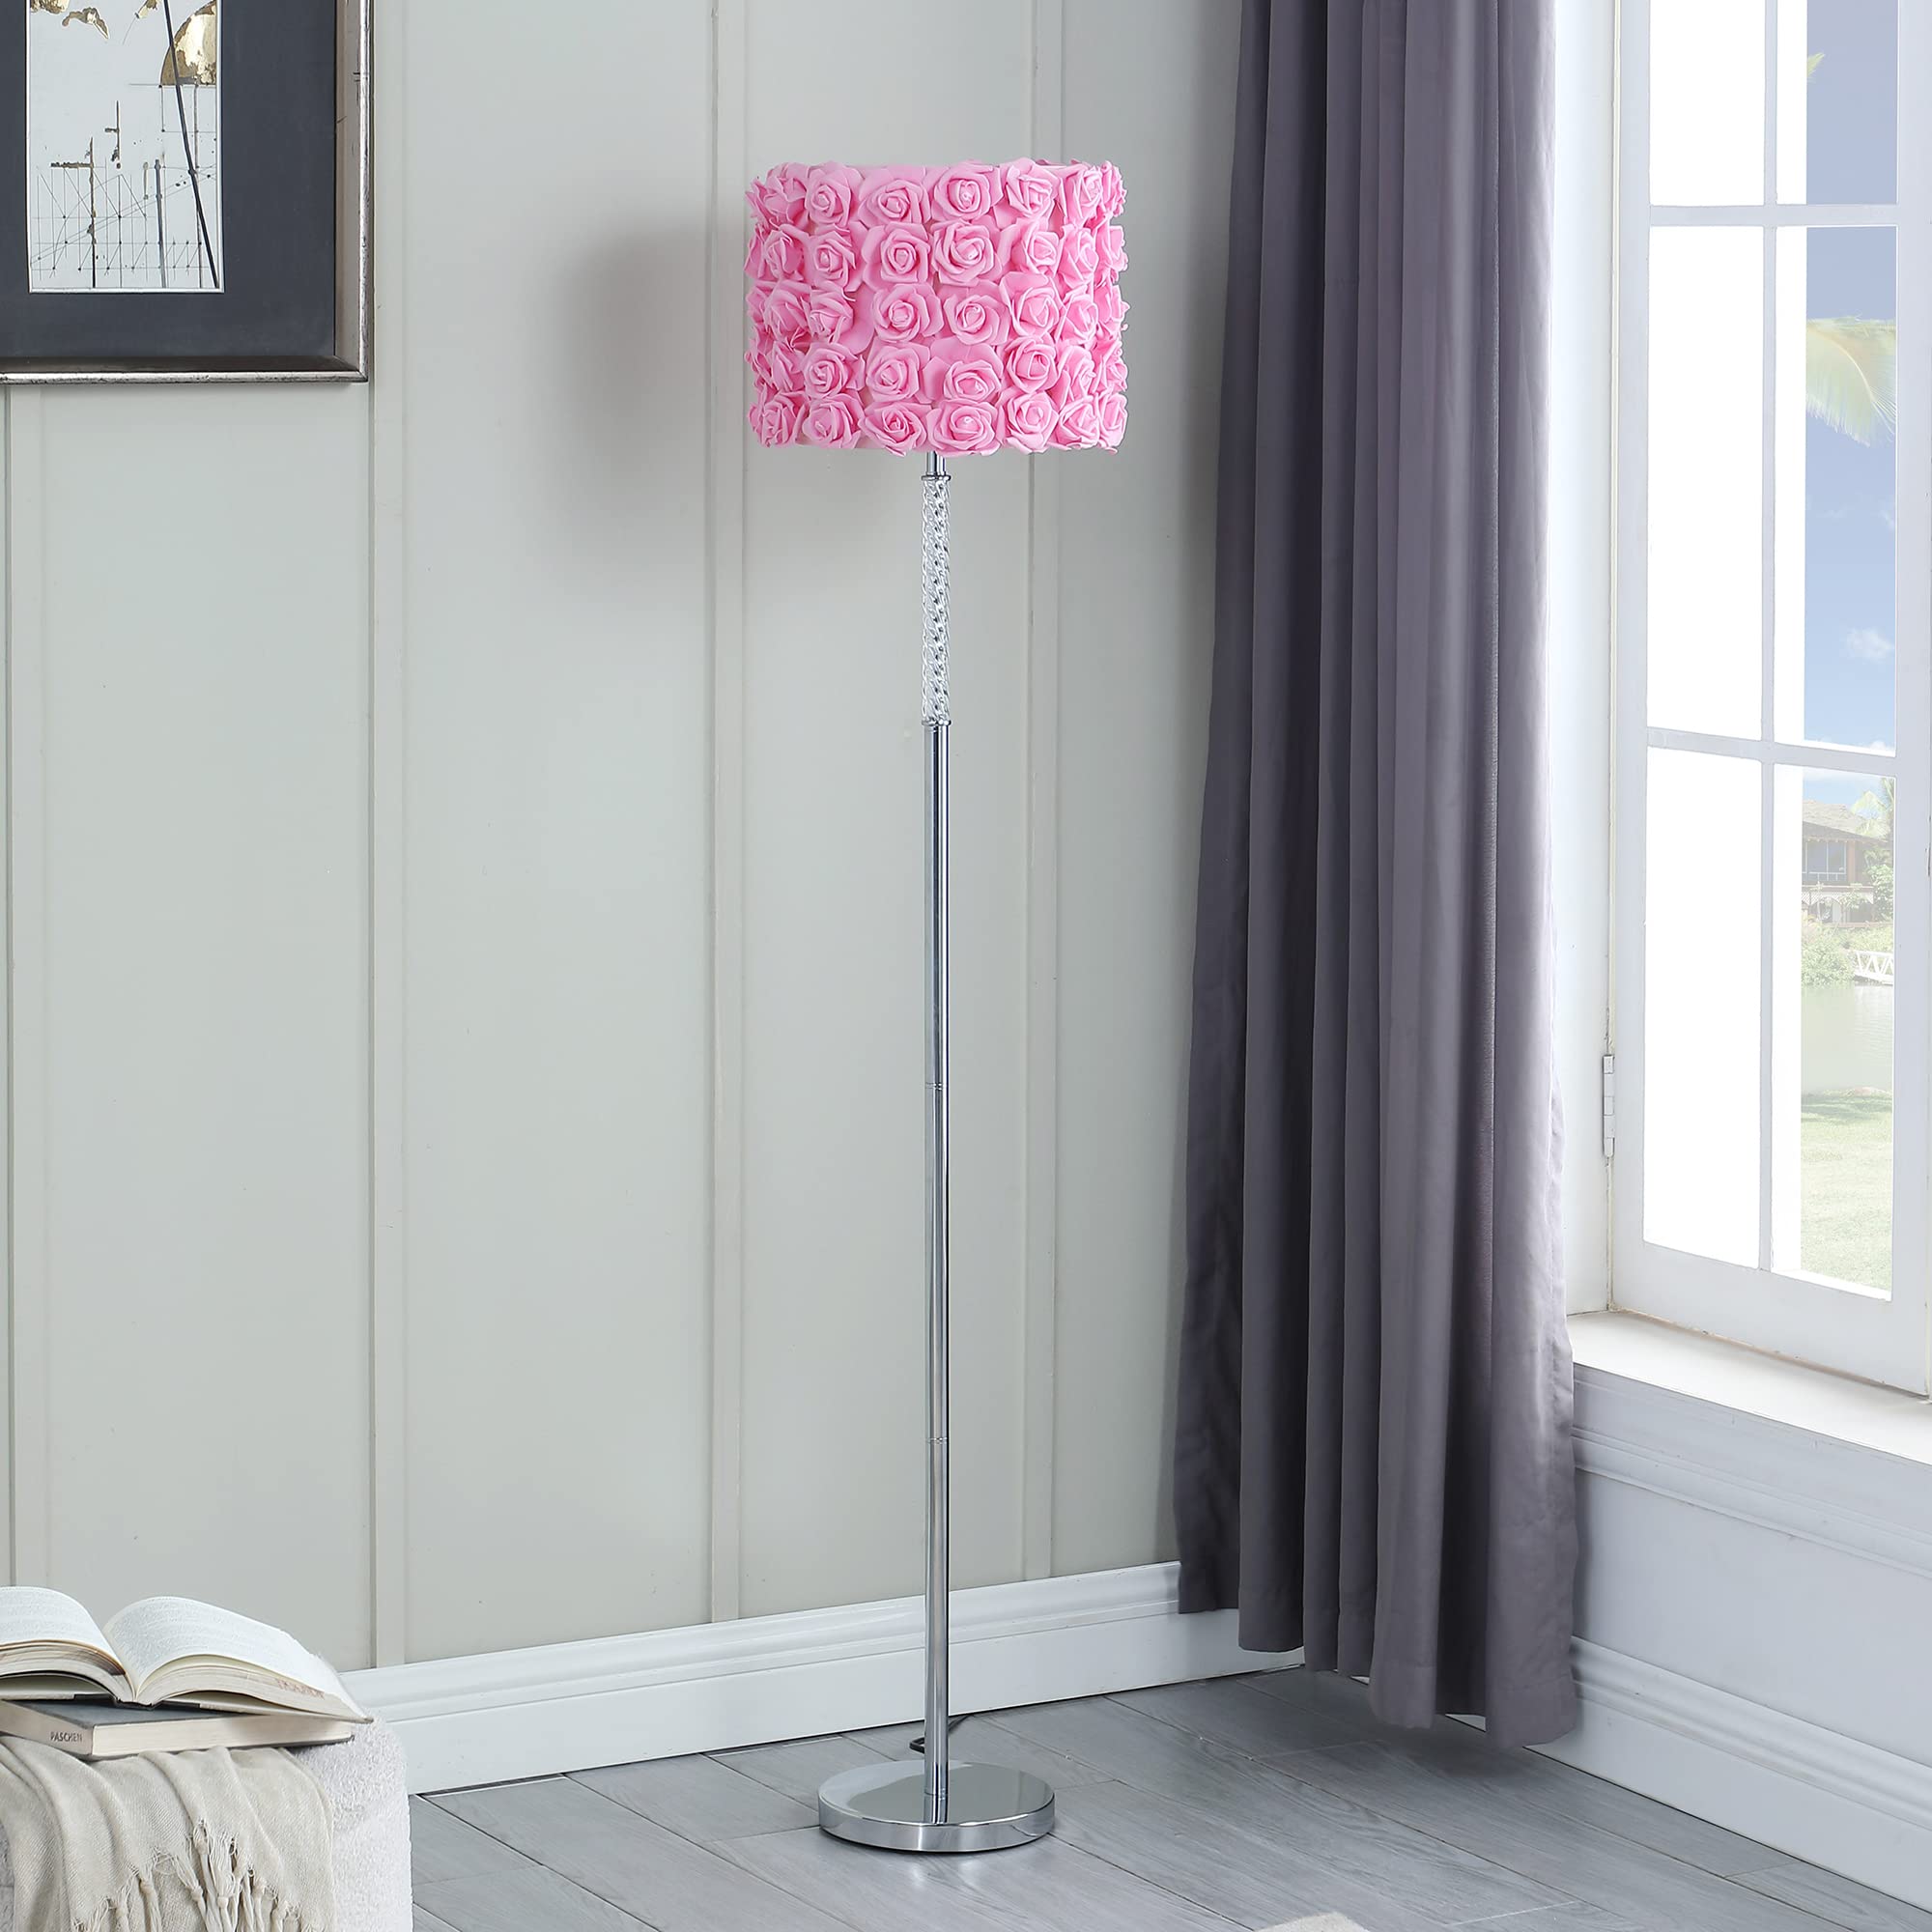 ORE HBL2802 Roses in Bloom Acrylic/Metal Floor Lamp, Pink, 63"